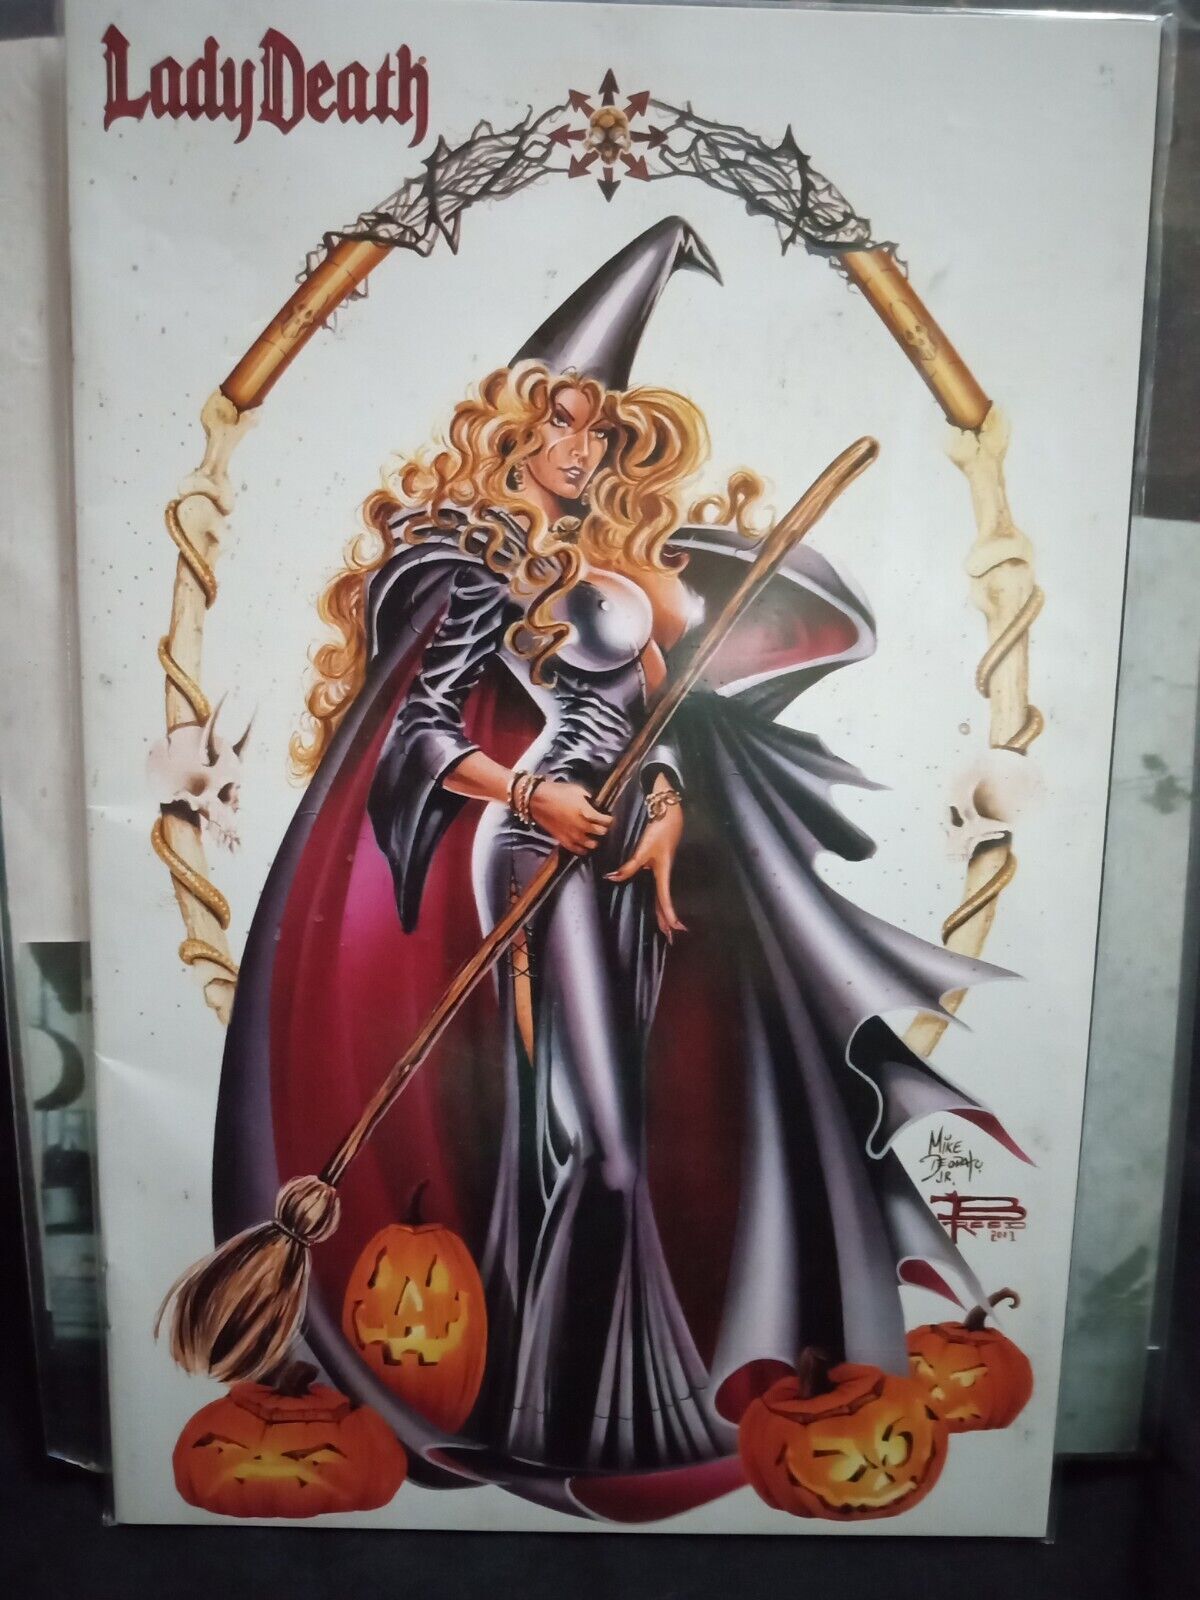 Lady Death Mischief Night #1- Super Premium Edition Limited To 1,000 Copies